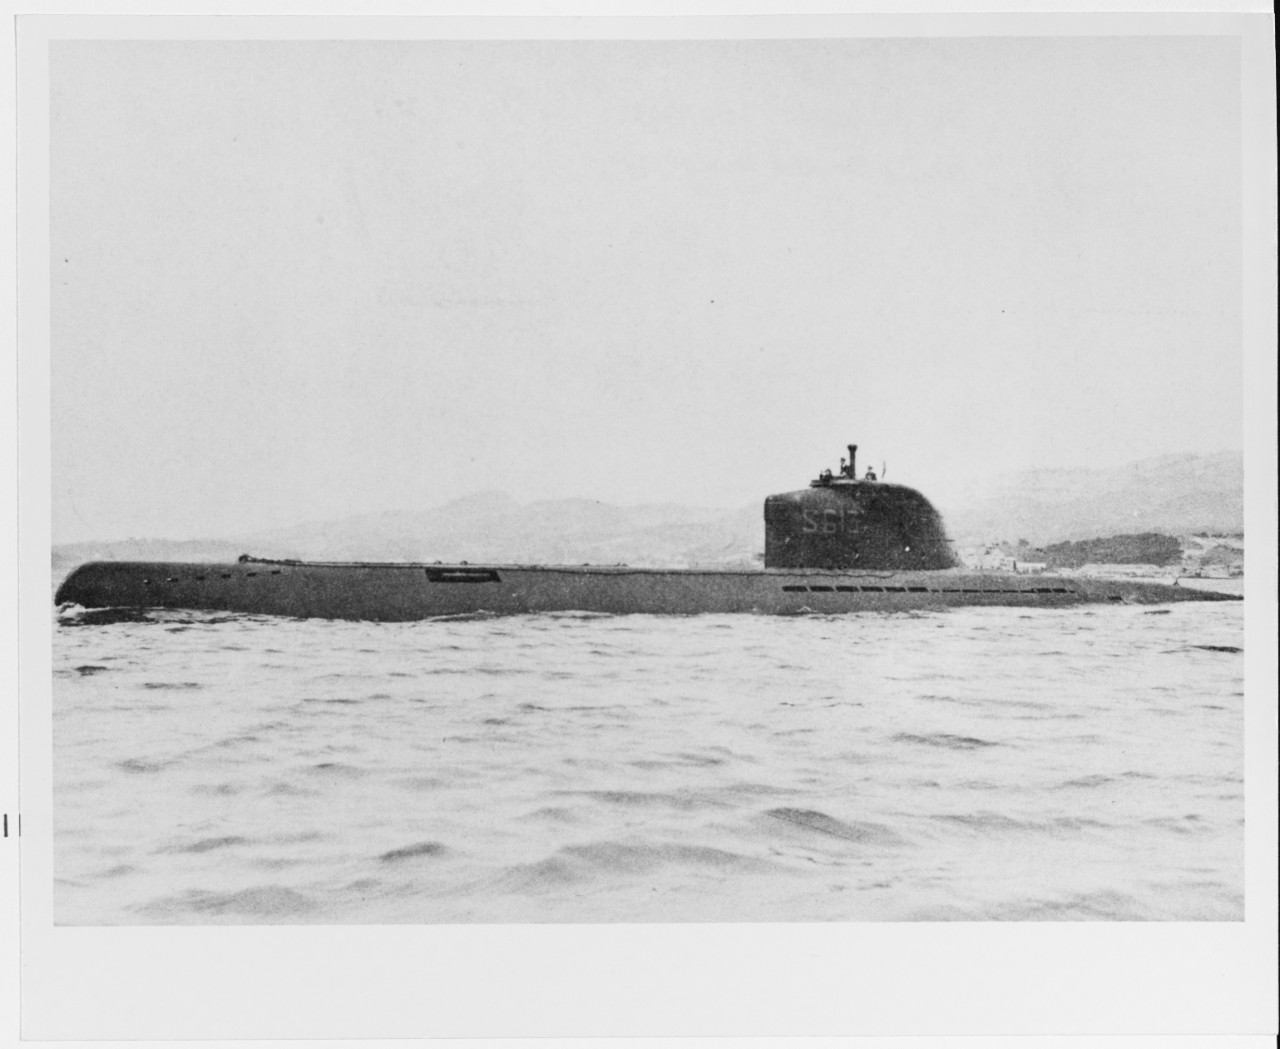 ROLAND MORILLOT (French Submarine, 1945-68)